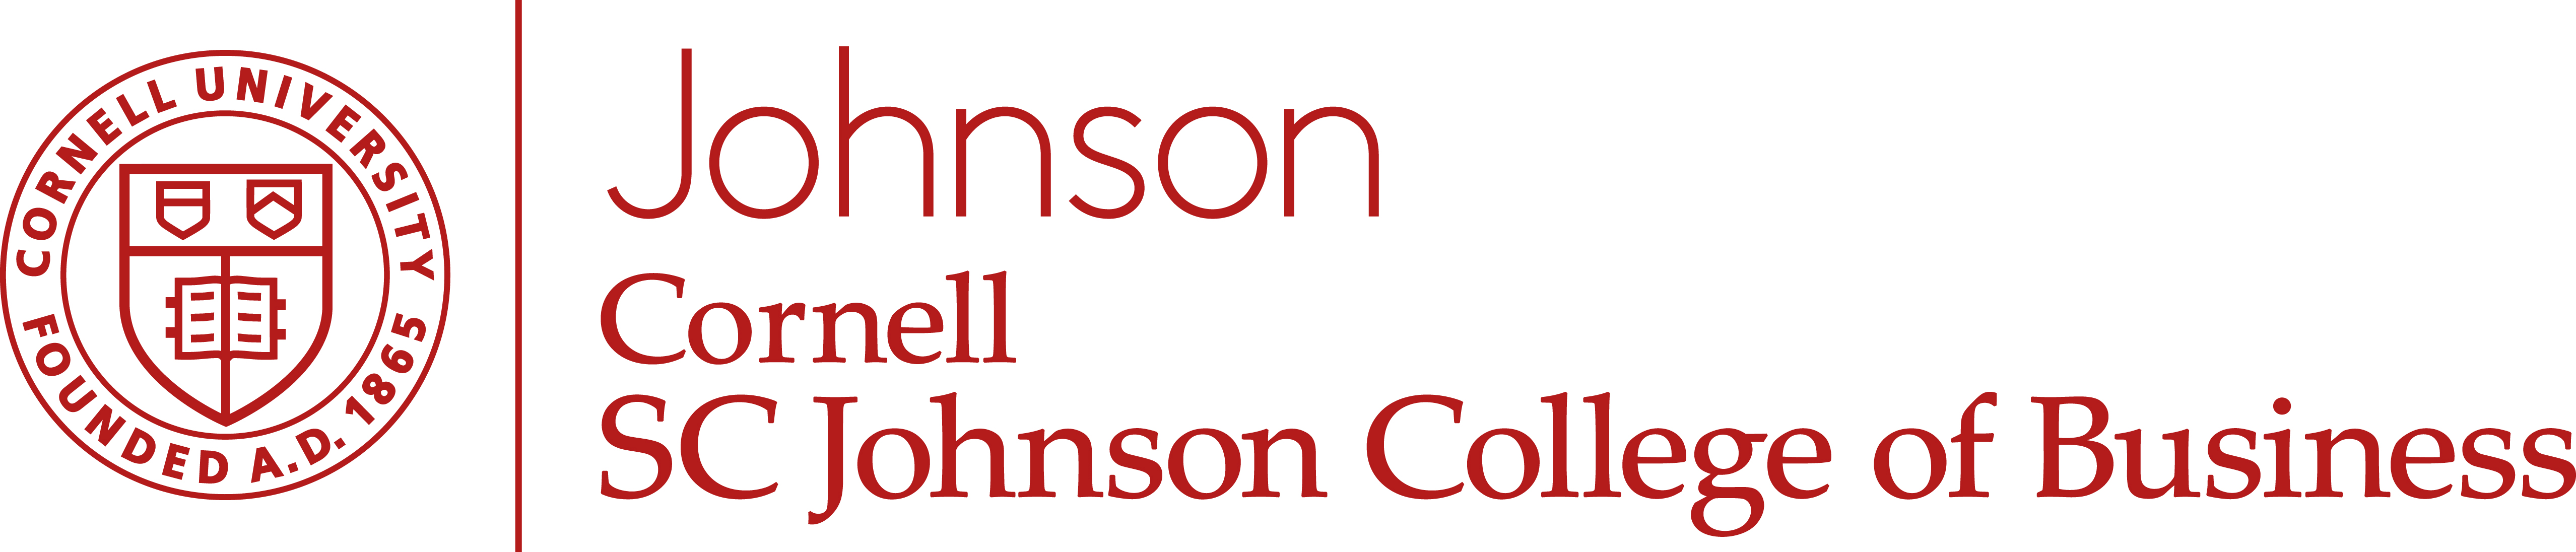 Johnson Cornell SC Johnson College of Business Logo